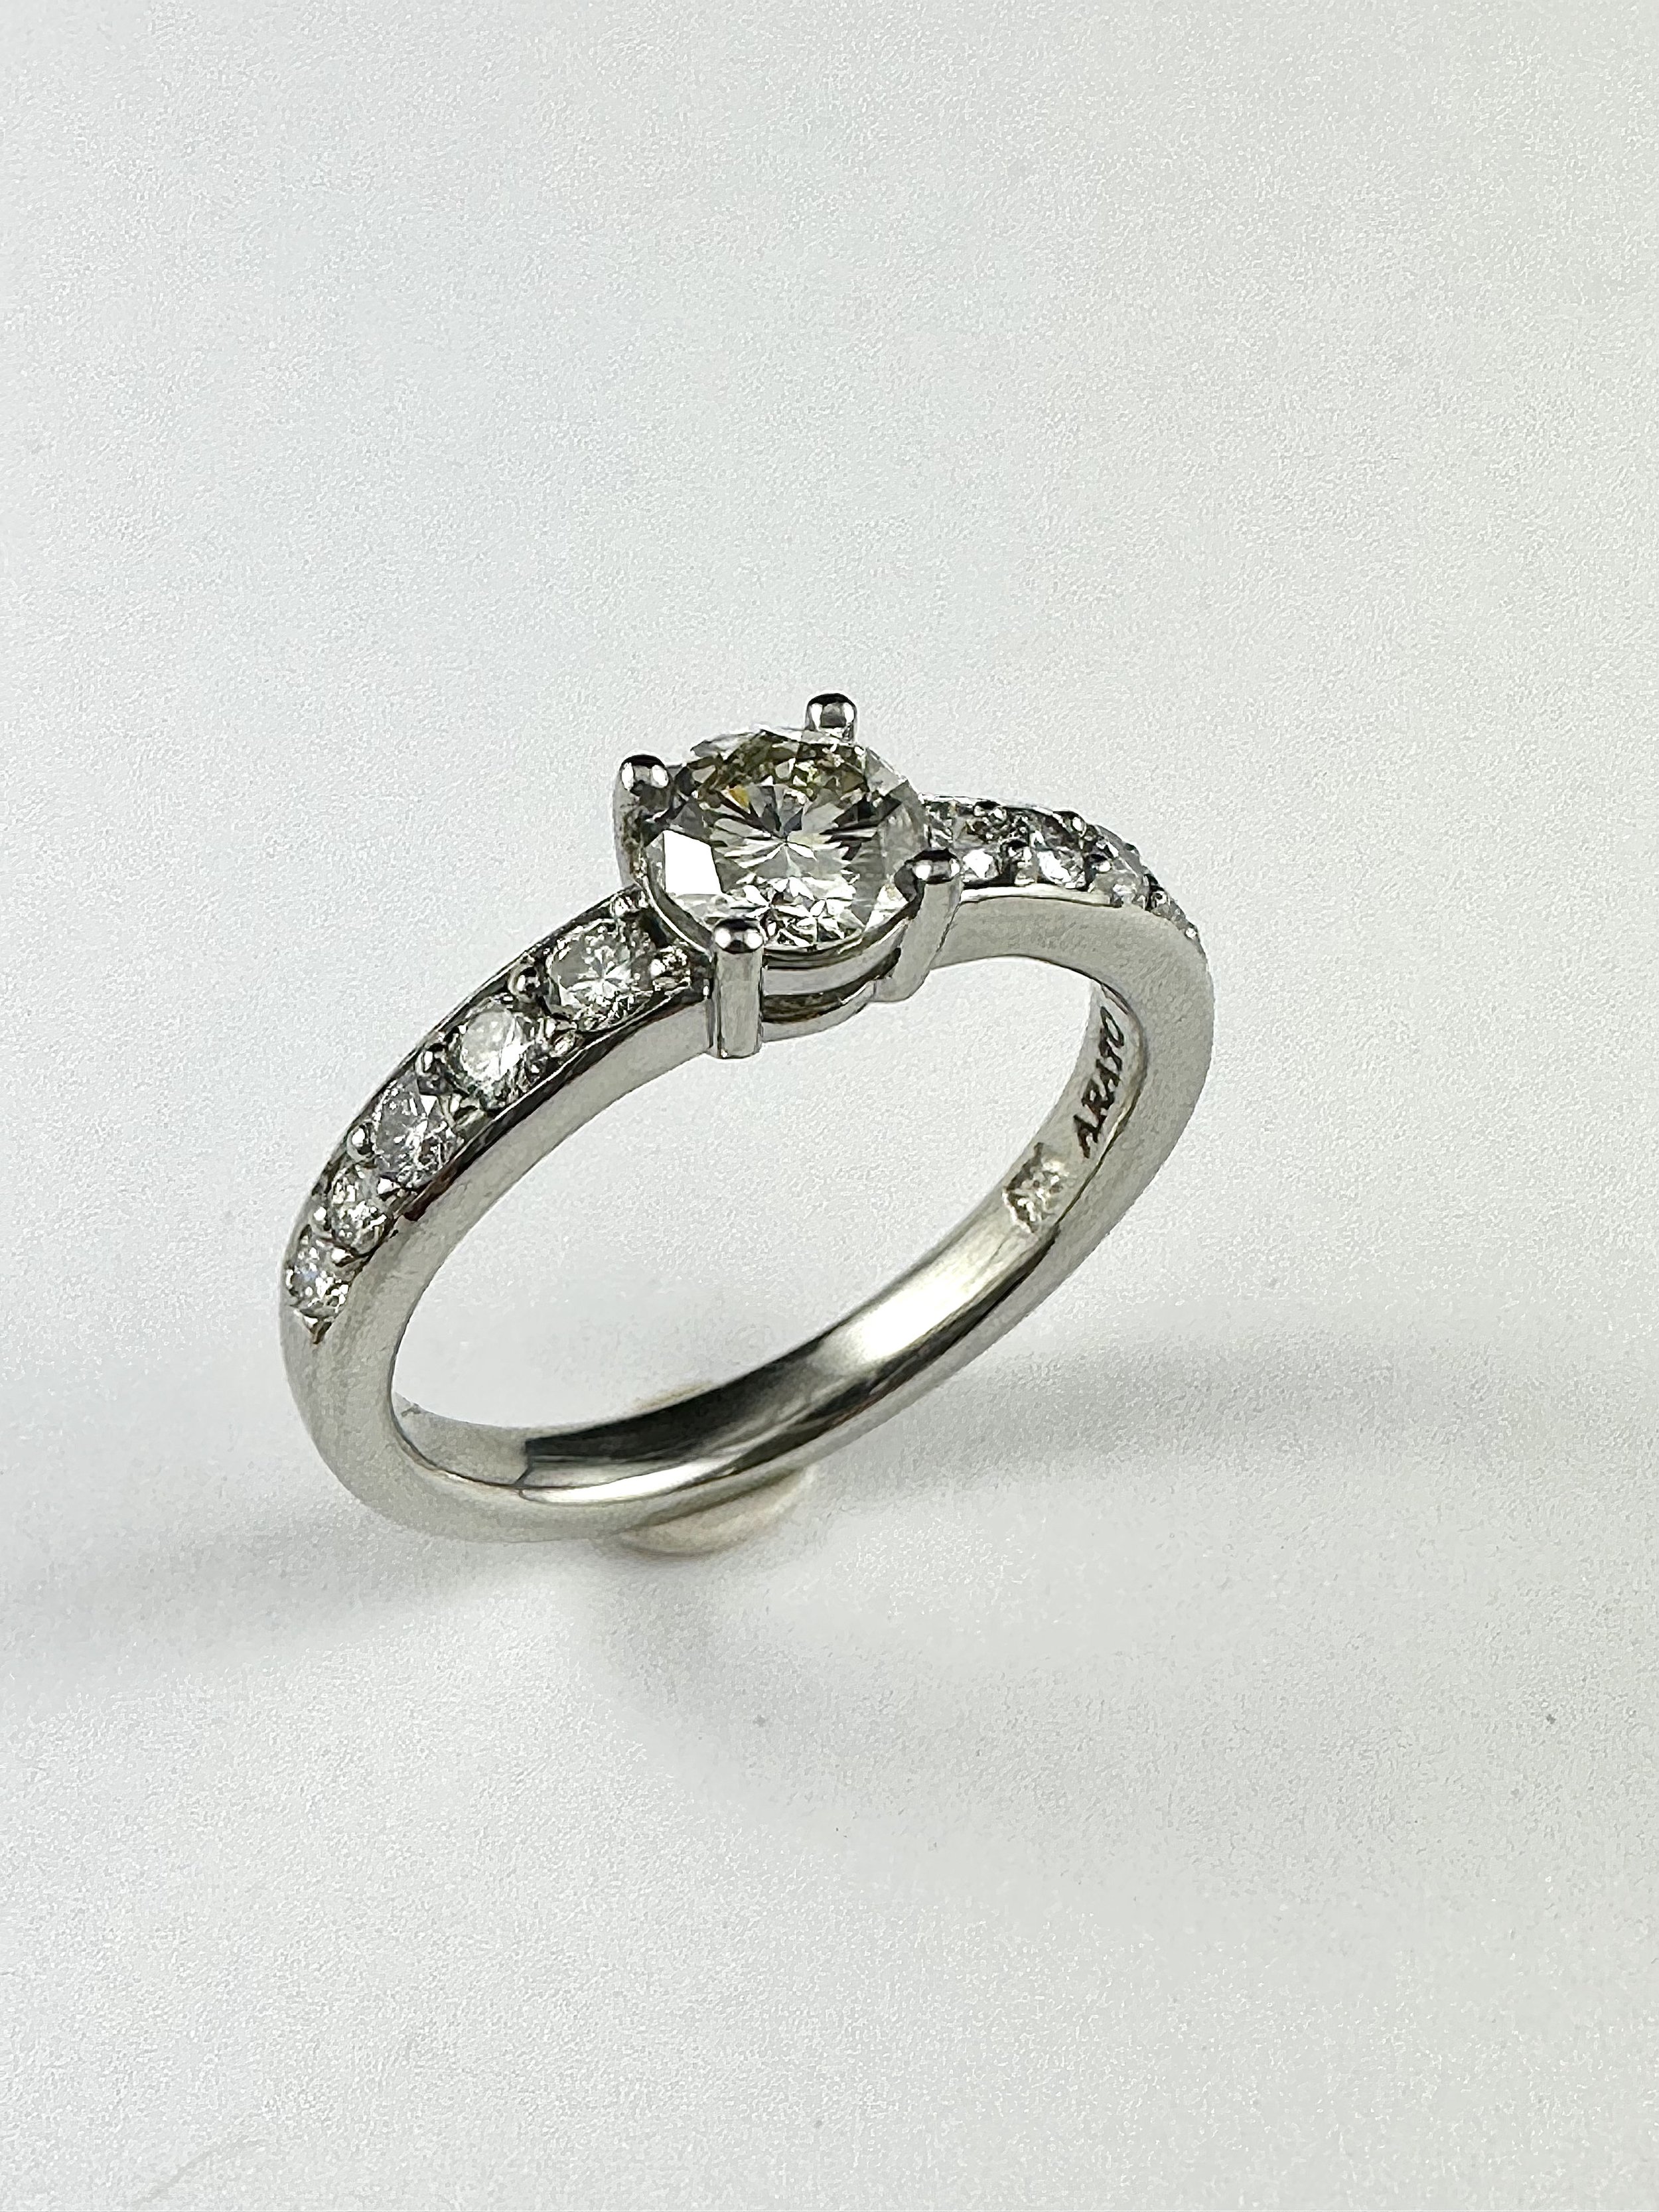 19K White Gold Diamond Ring